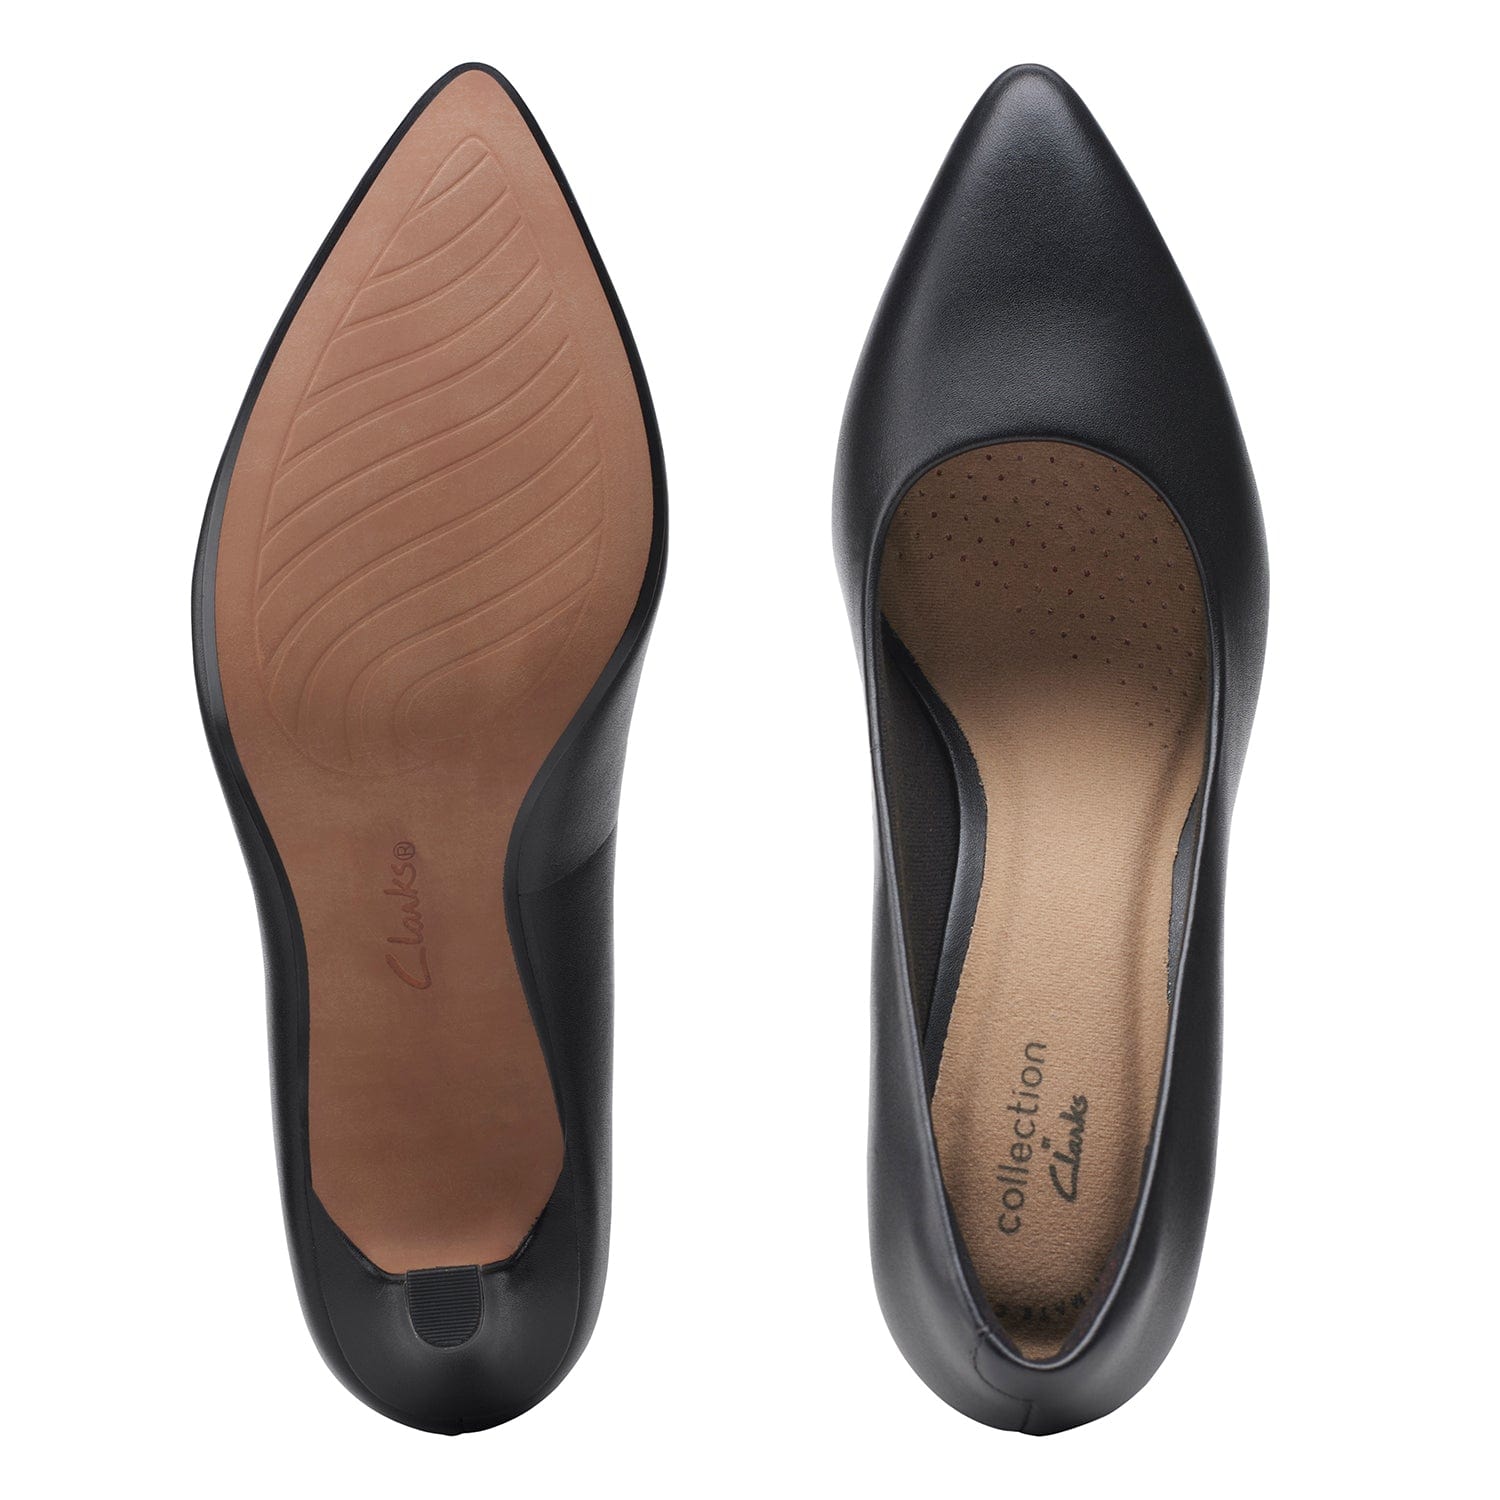 Clarks Illeana Tulip Shoes - Black Leather - 261532164 - D Width (Standard Fit)